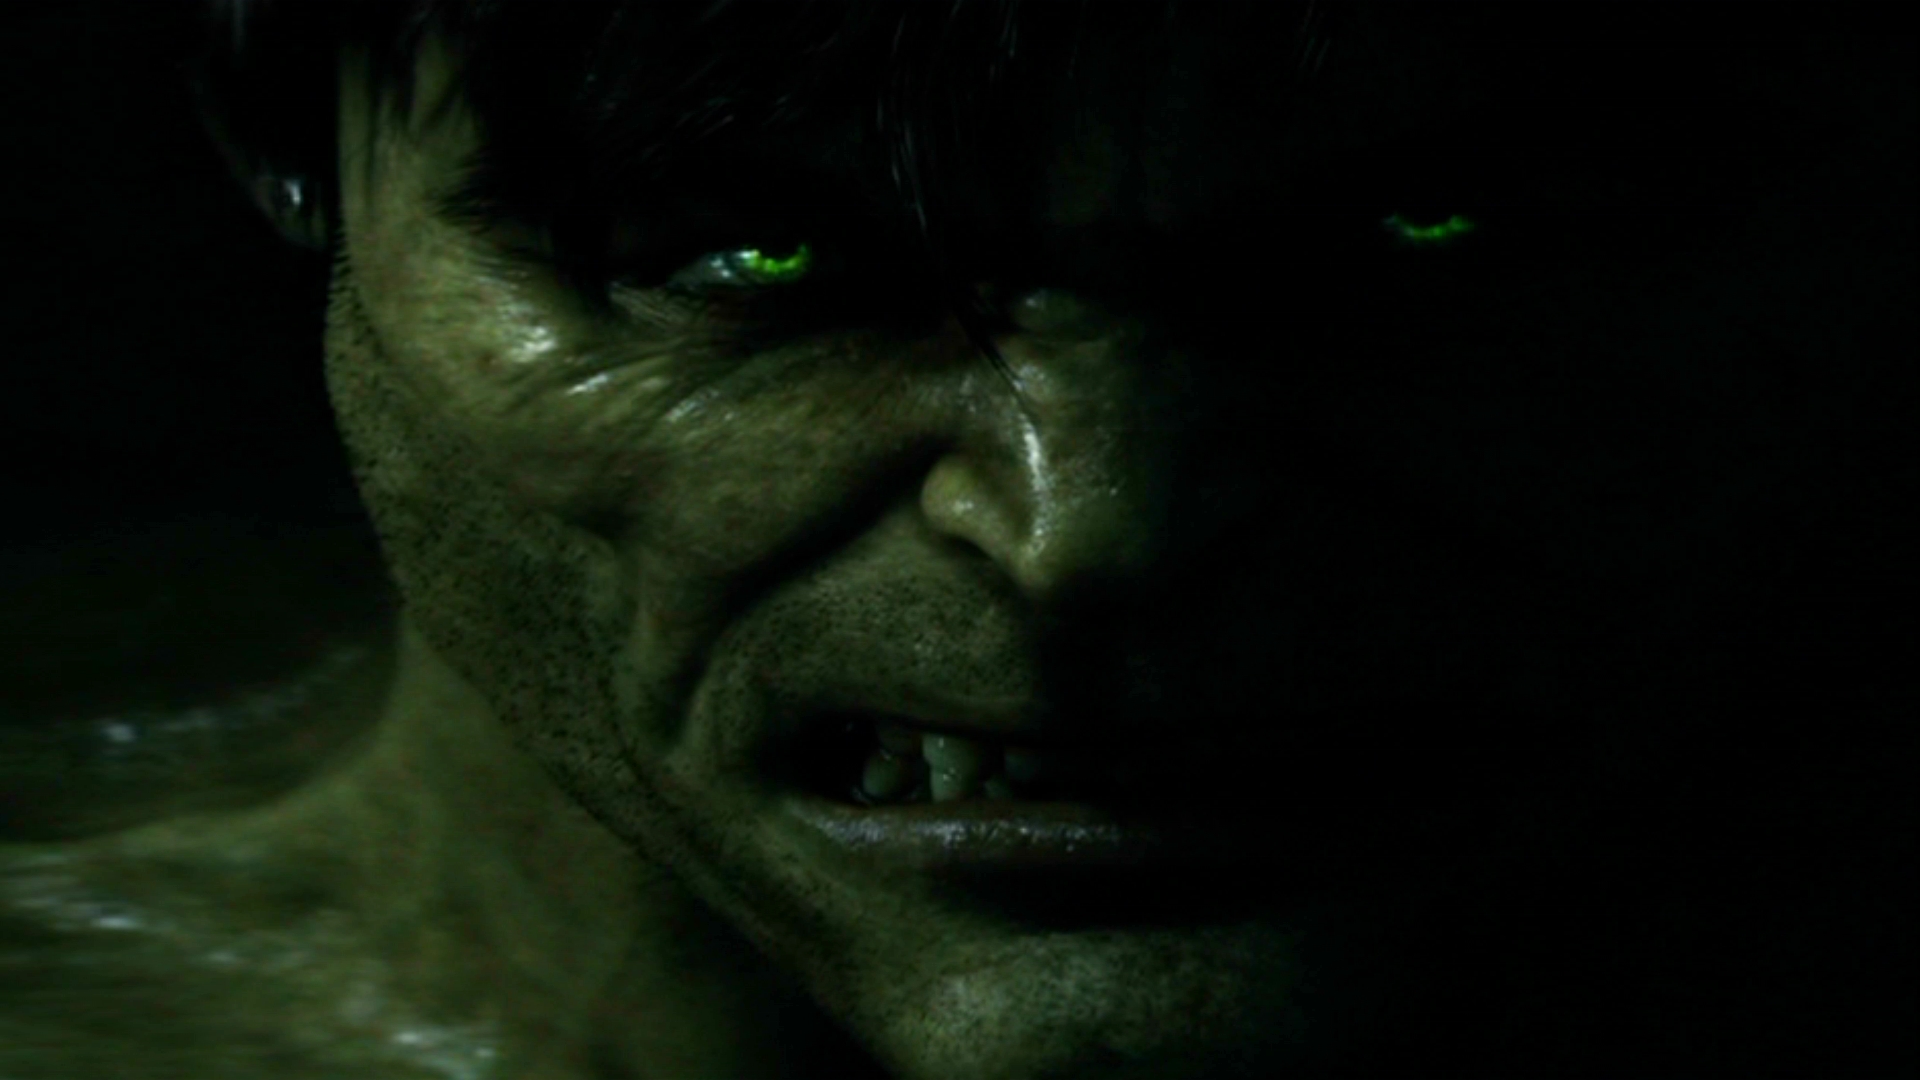 Film The Incredible Hulk Fond d'écran HD | Image